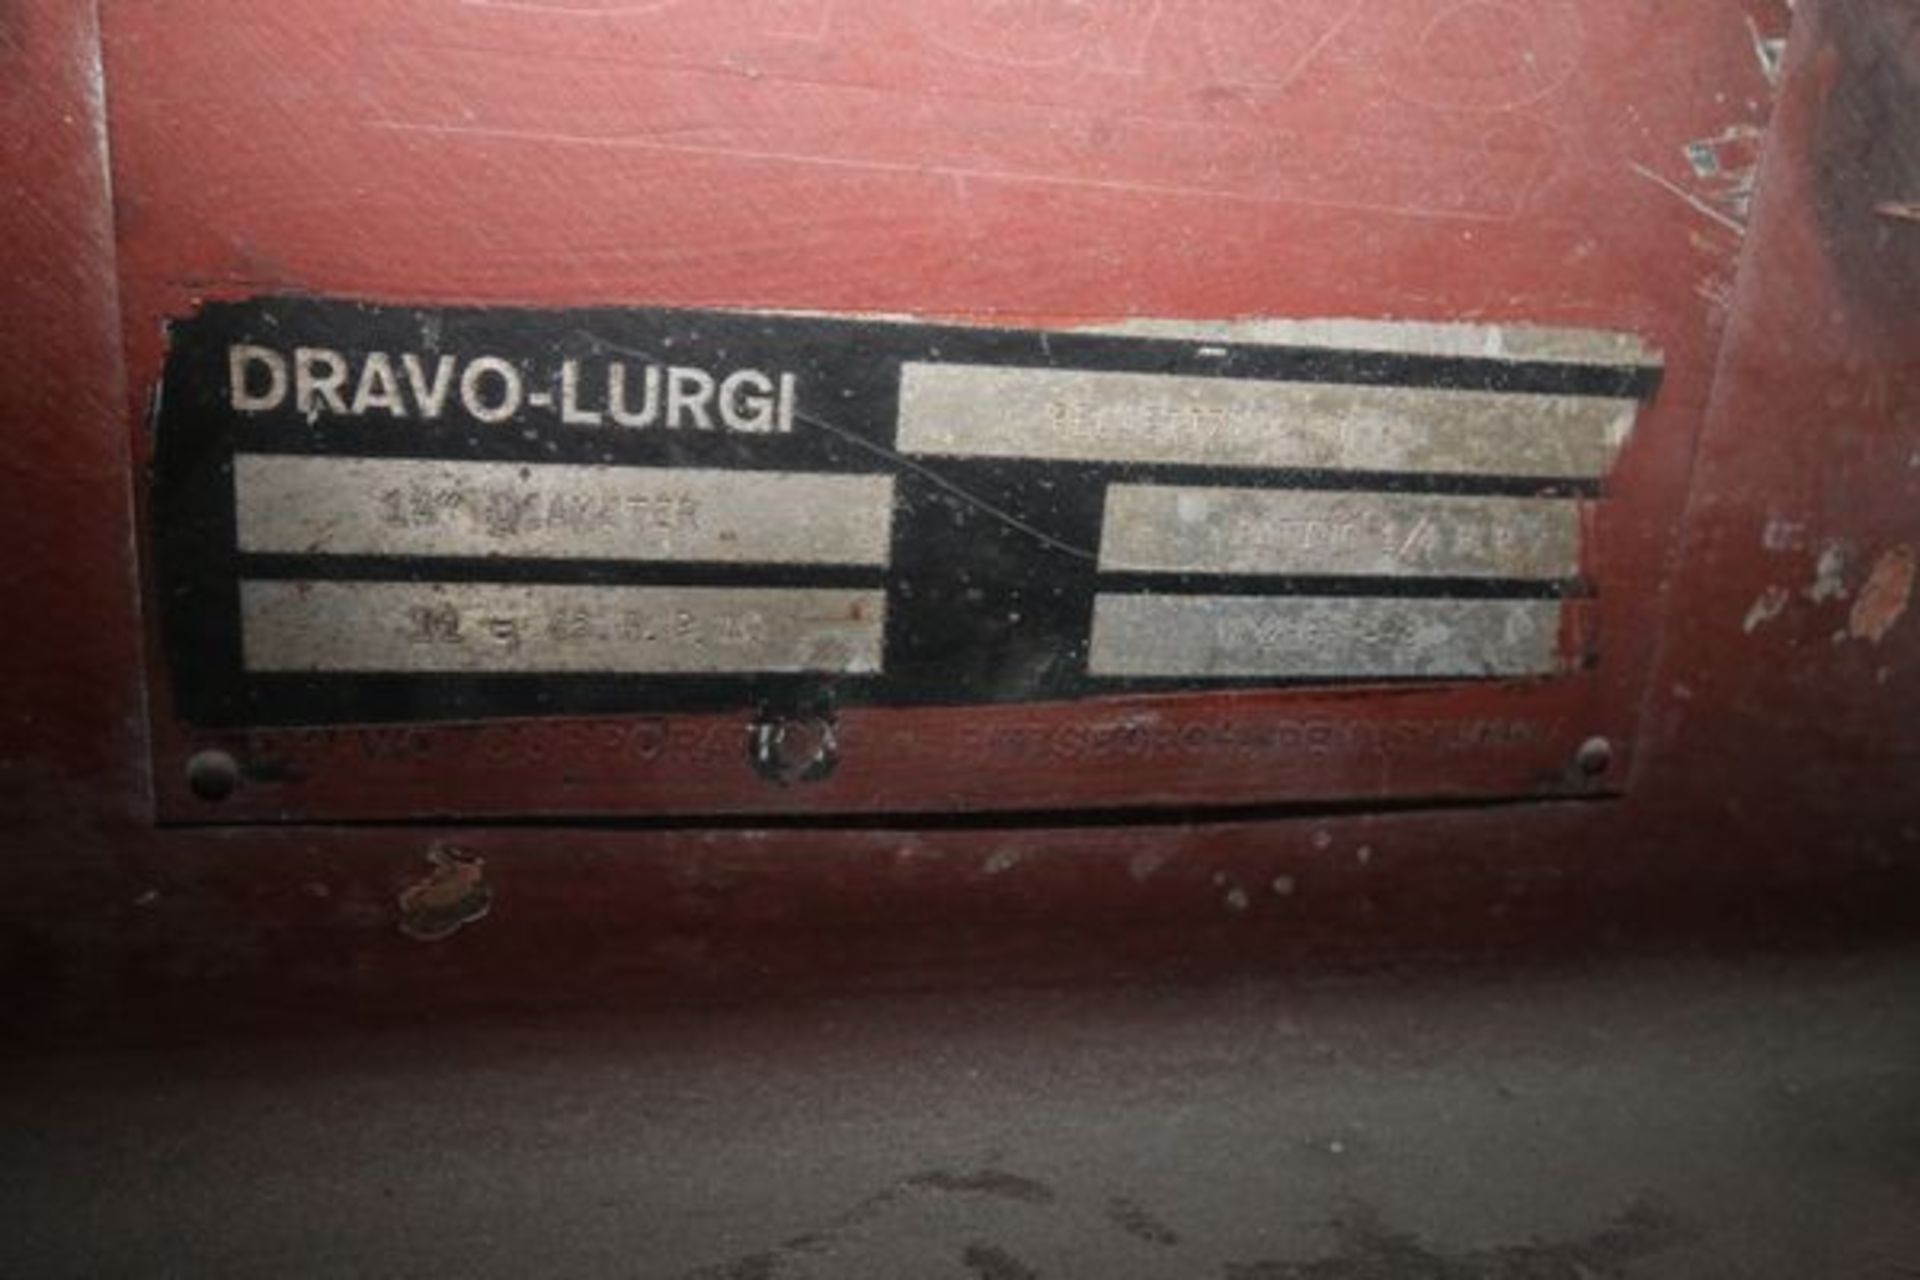 Dravo Lurugi 14? Palletizing Disc., S/N W2865-2, ¬ hp Motor, 11-45 RPM, Variable Speed Drive, - Image 3 of 3